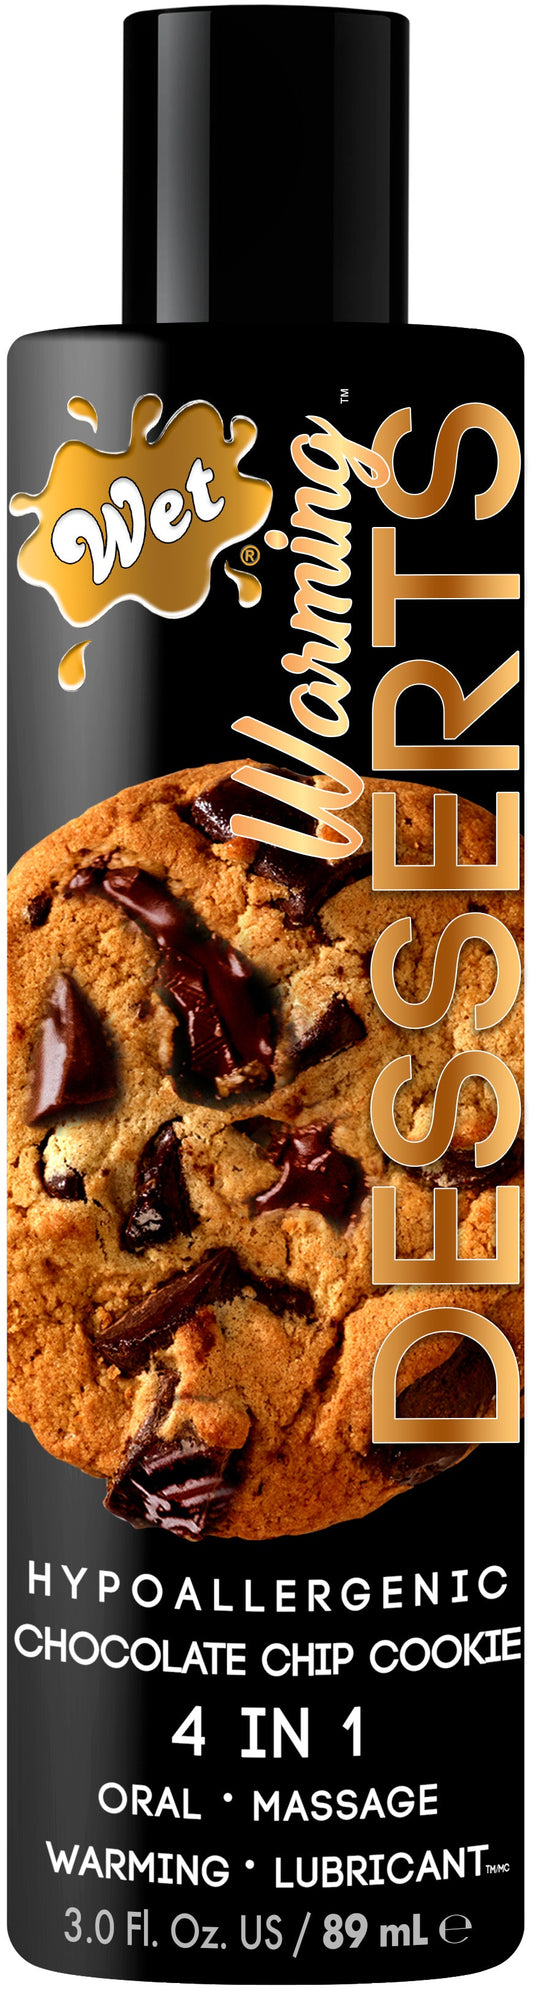 Wet Warming Desserts Baked Chocolate Chip Cookie - 3 Fl. Oz. WT21582